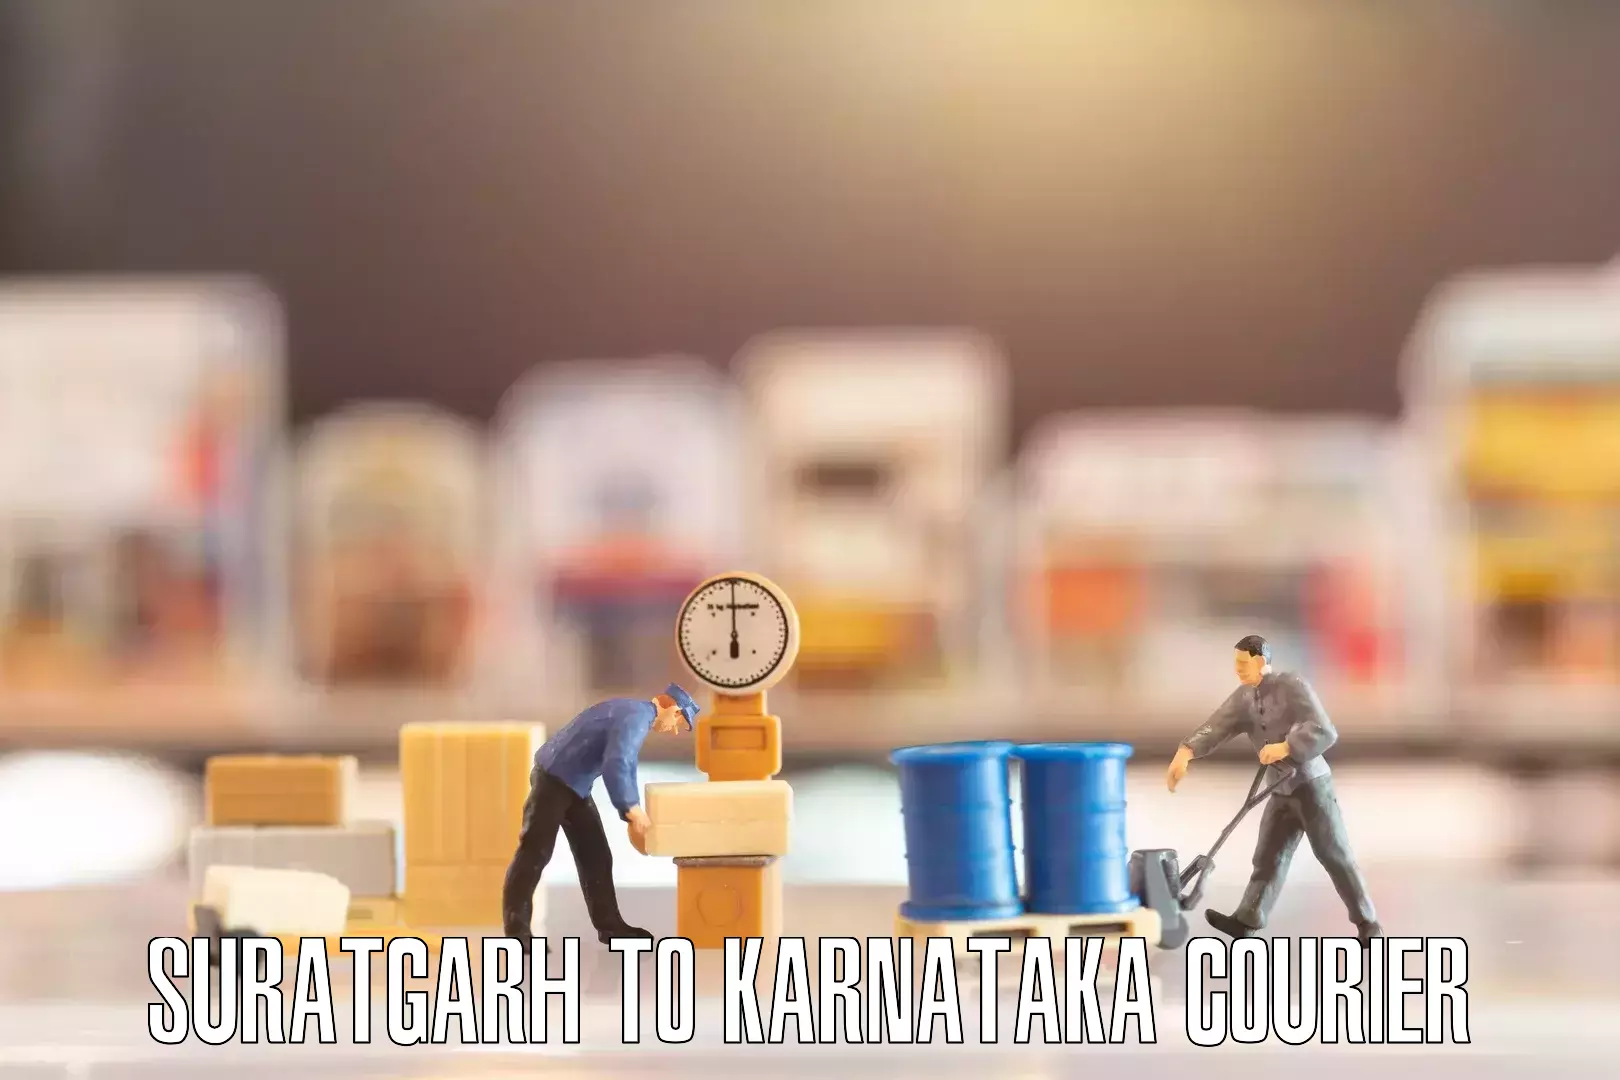 Quality moving company Suratgarh to Banavara